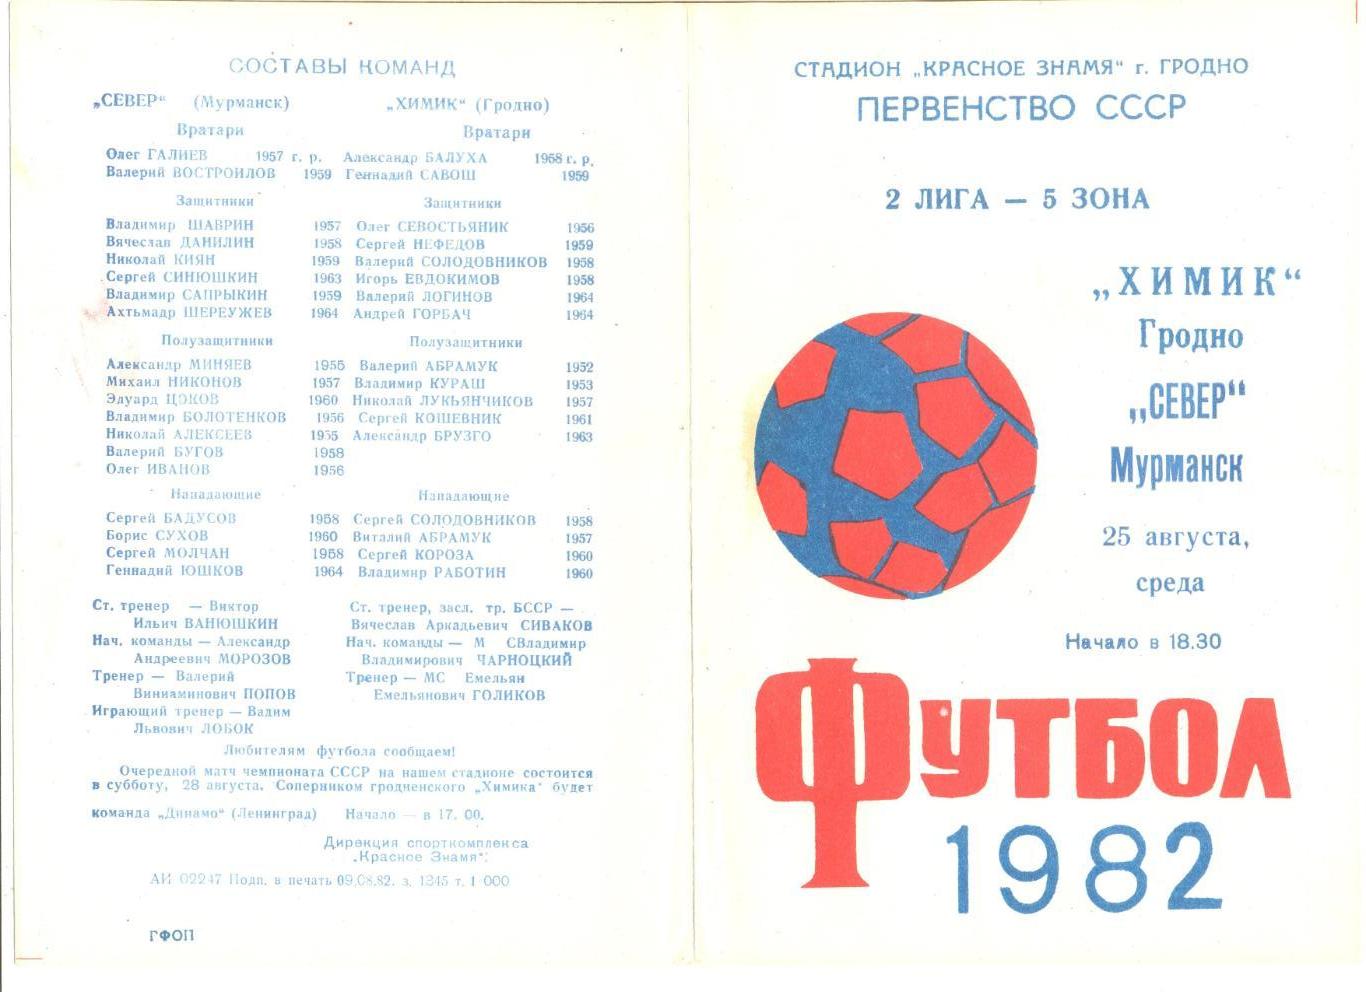 Химик Гродно - Север Мурманск 25.08.1982 г.